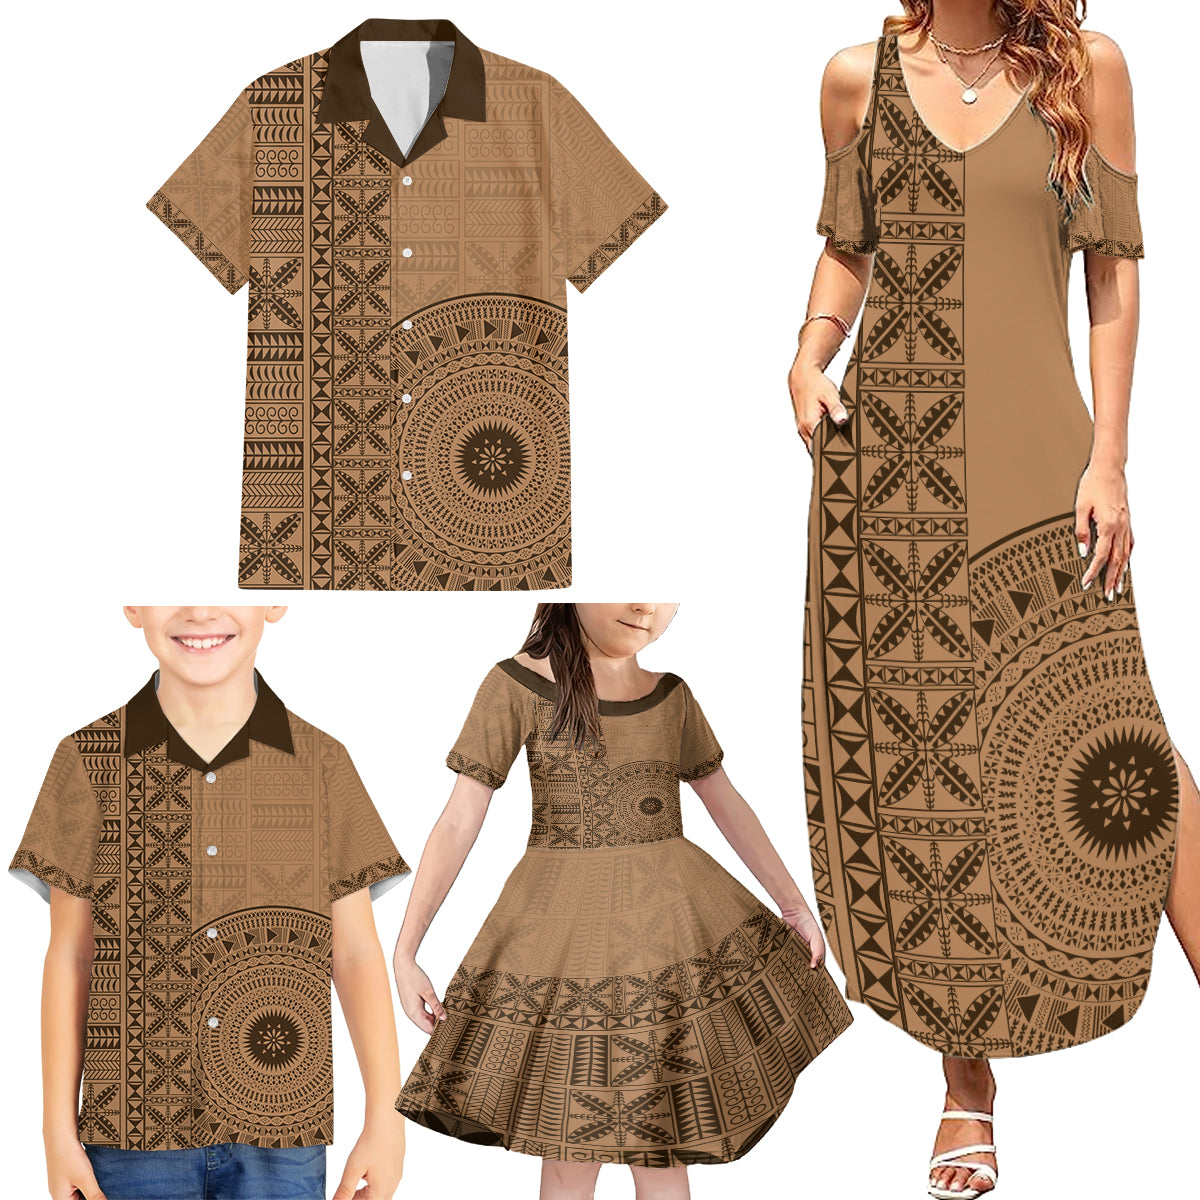 Fakaalofa Lahi Atu Niue Family Matching Summer Maxi Dress and Hawaiian Shirt Vintage Hiapo Pattern Brown Version LT14 - Polynesian Pride